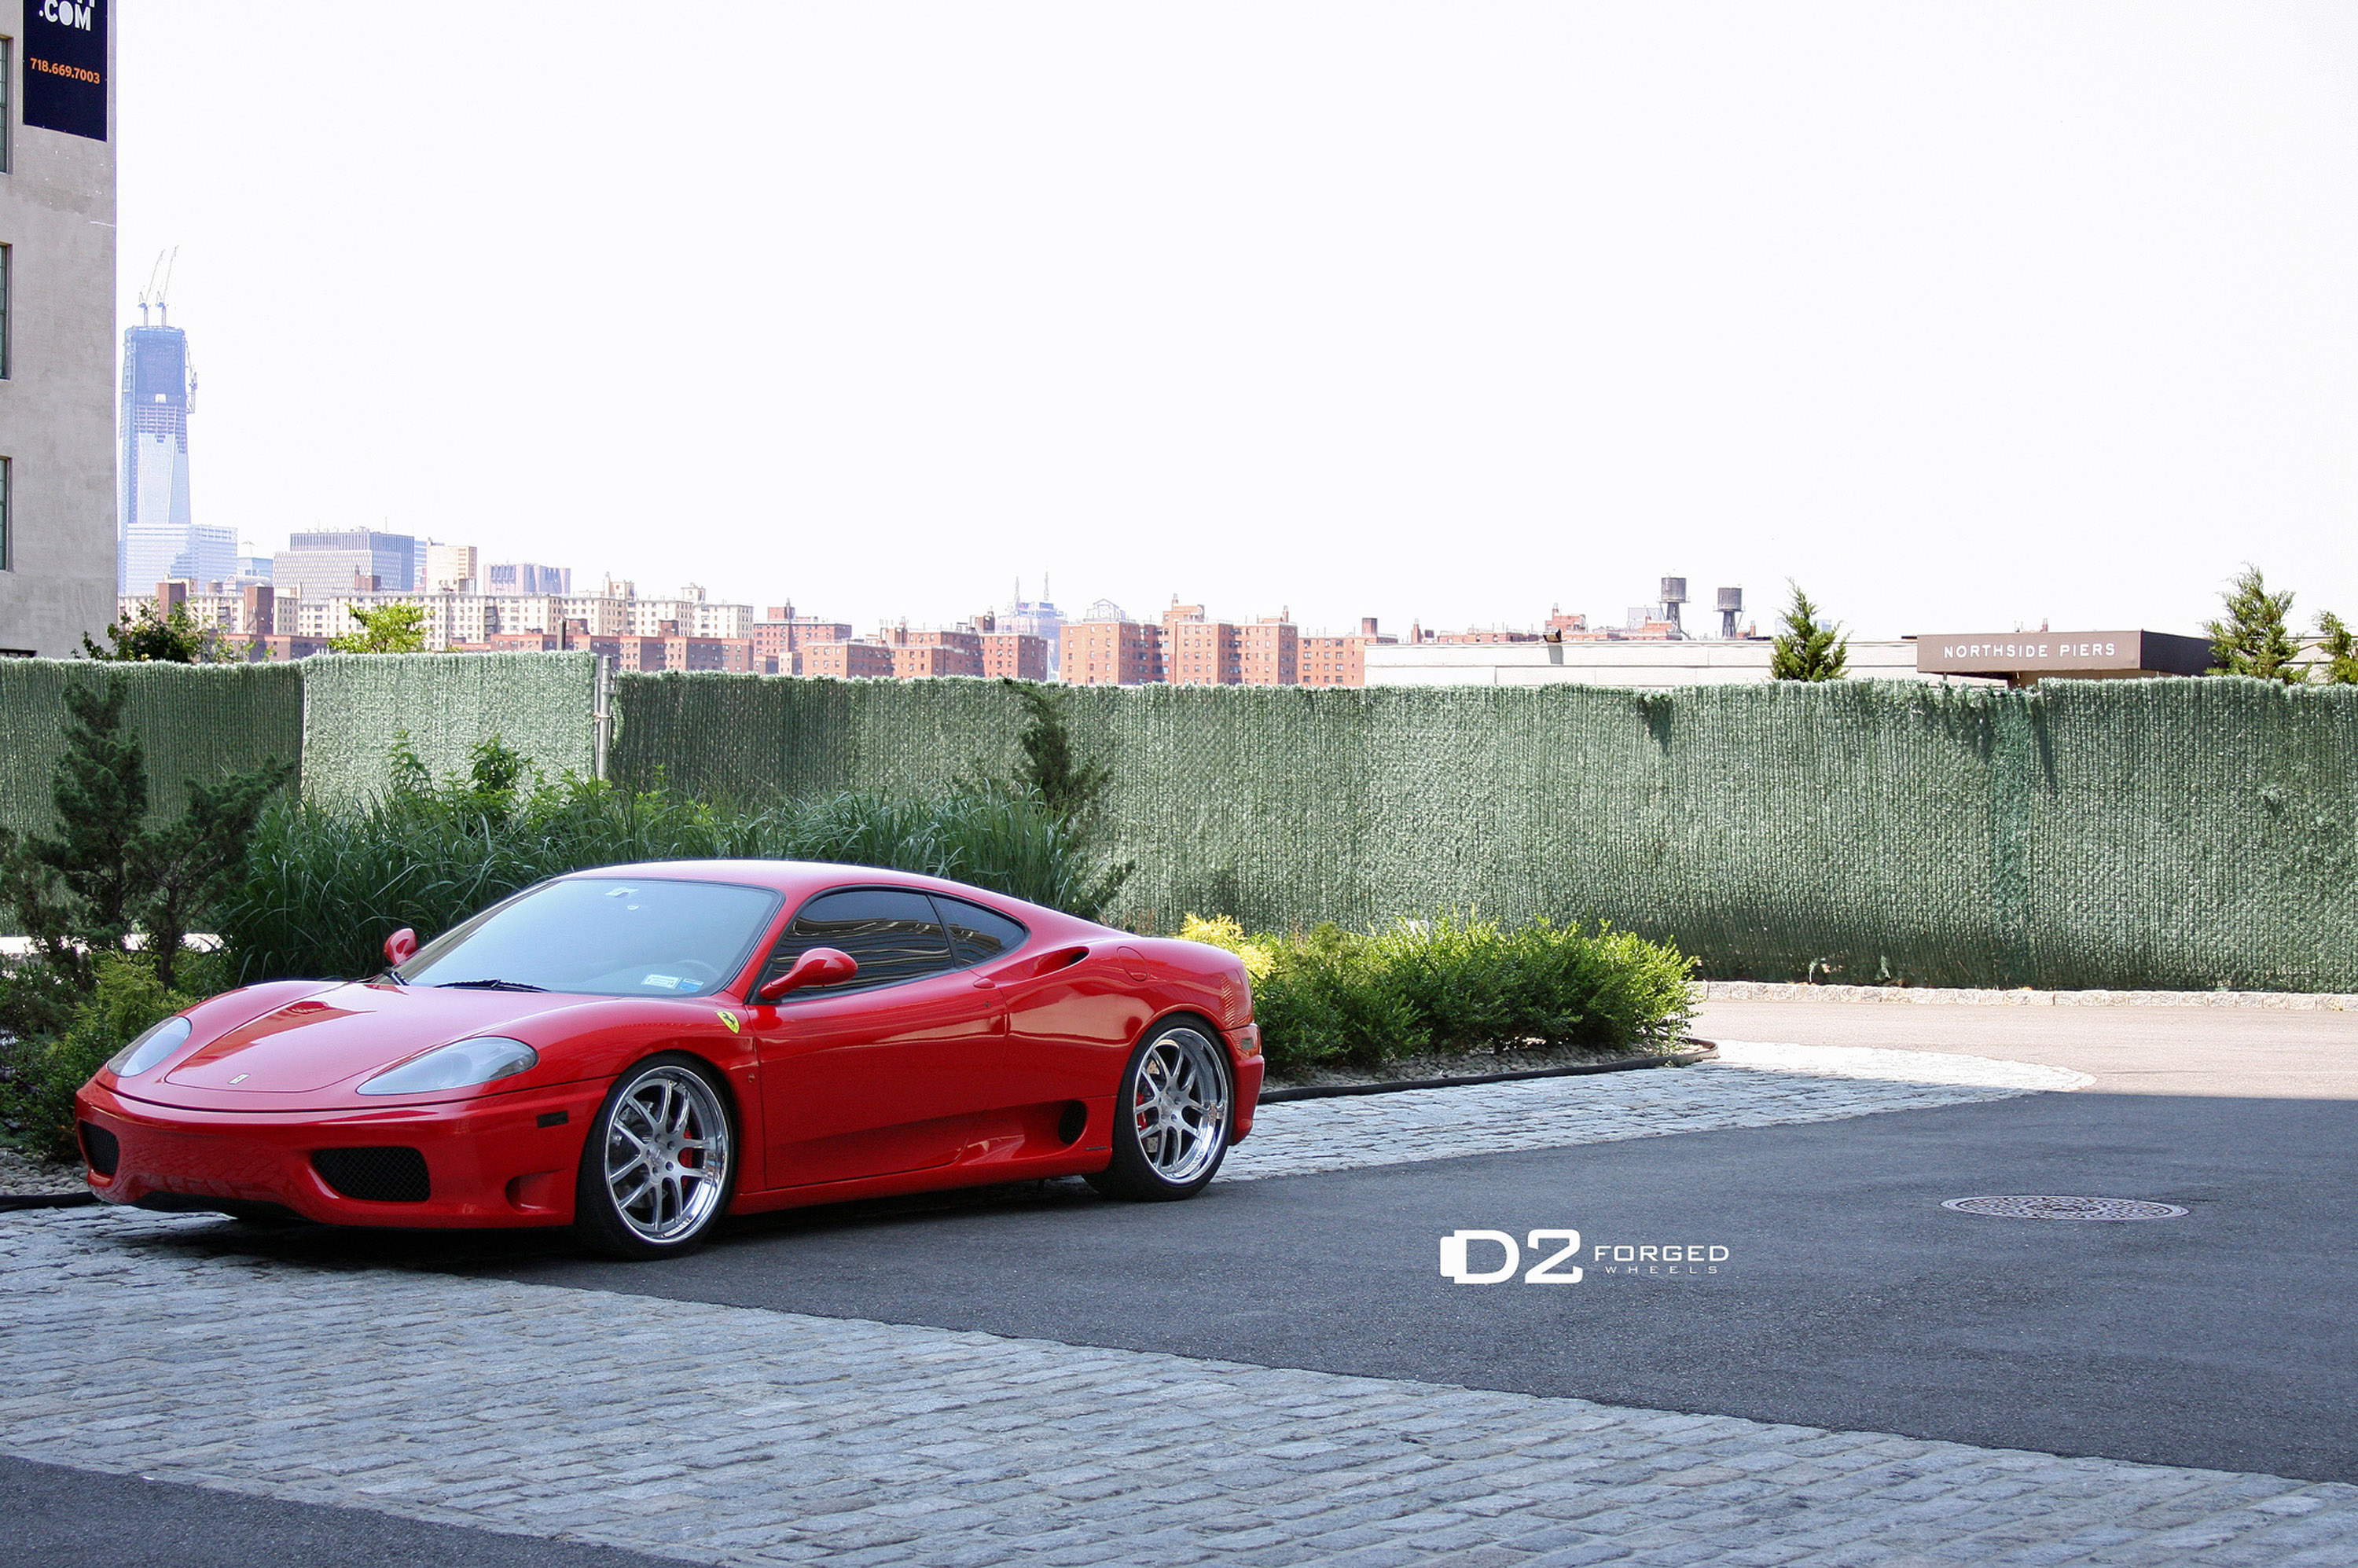 2012, D2forged, Ferrari, 360, Fms 08, Supercars, Supercar Wallpaper